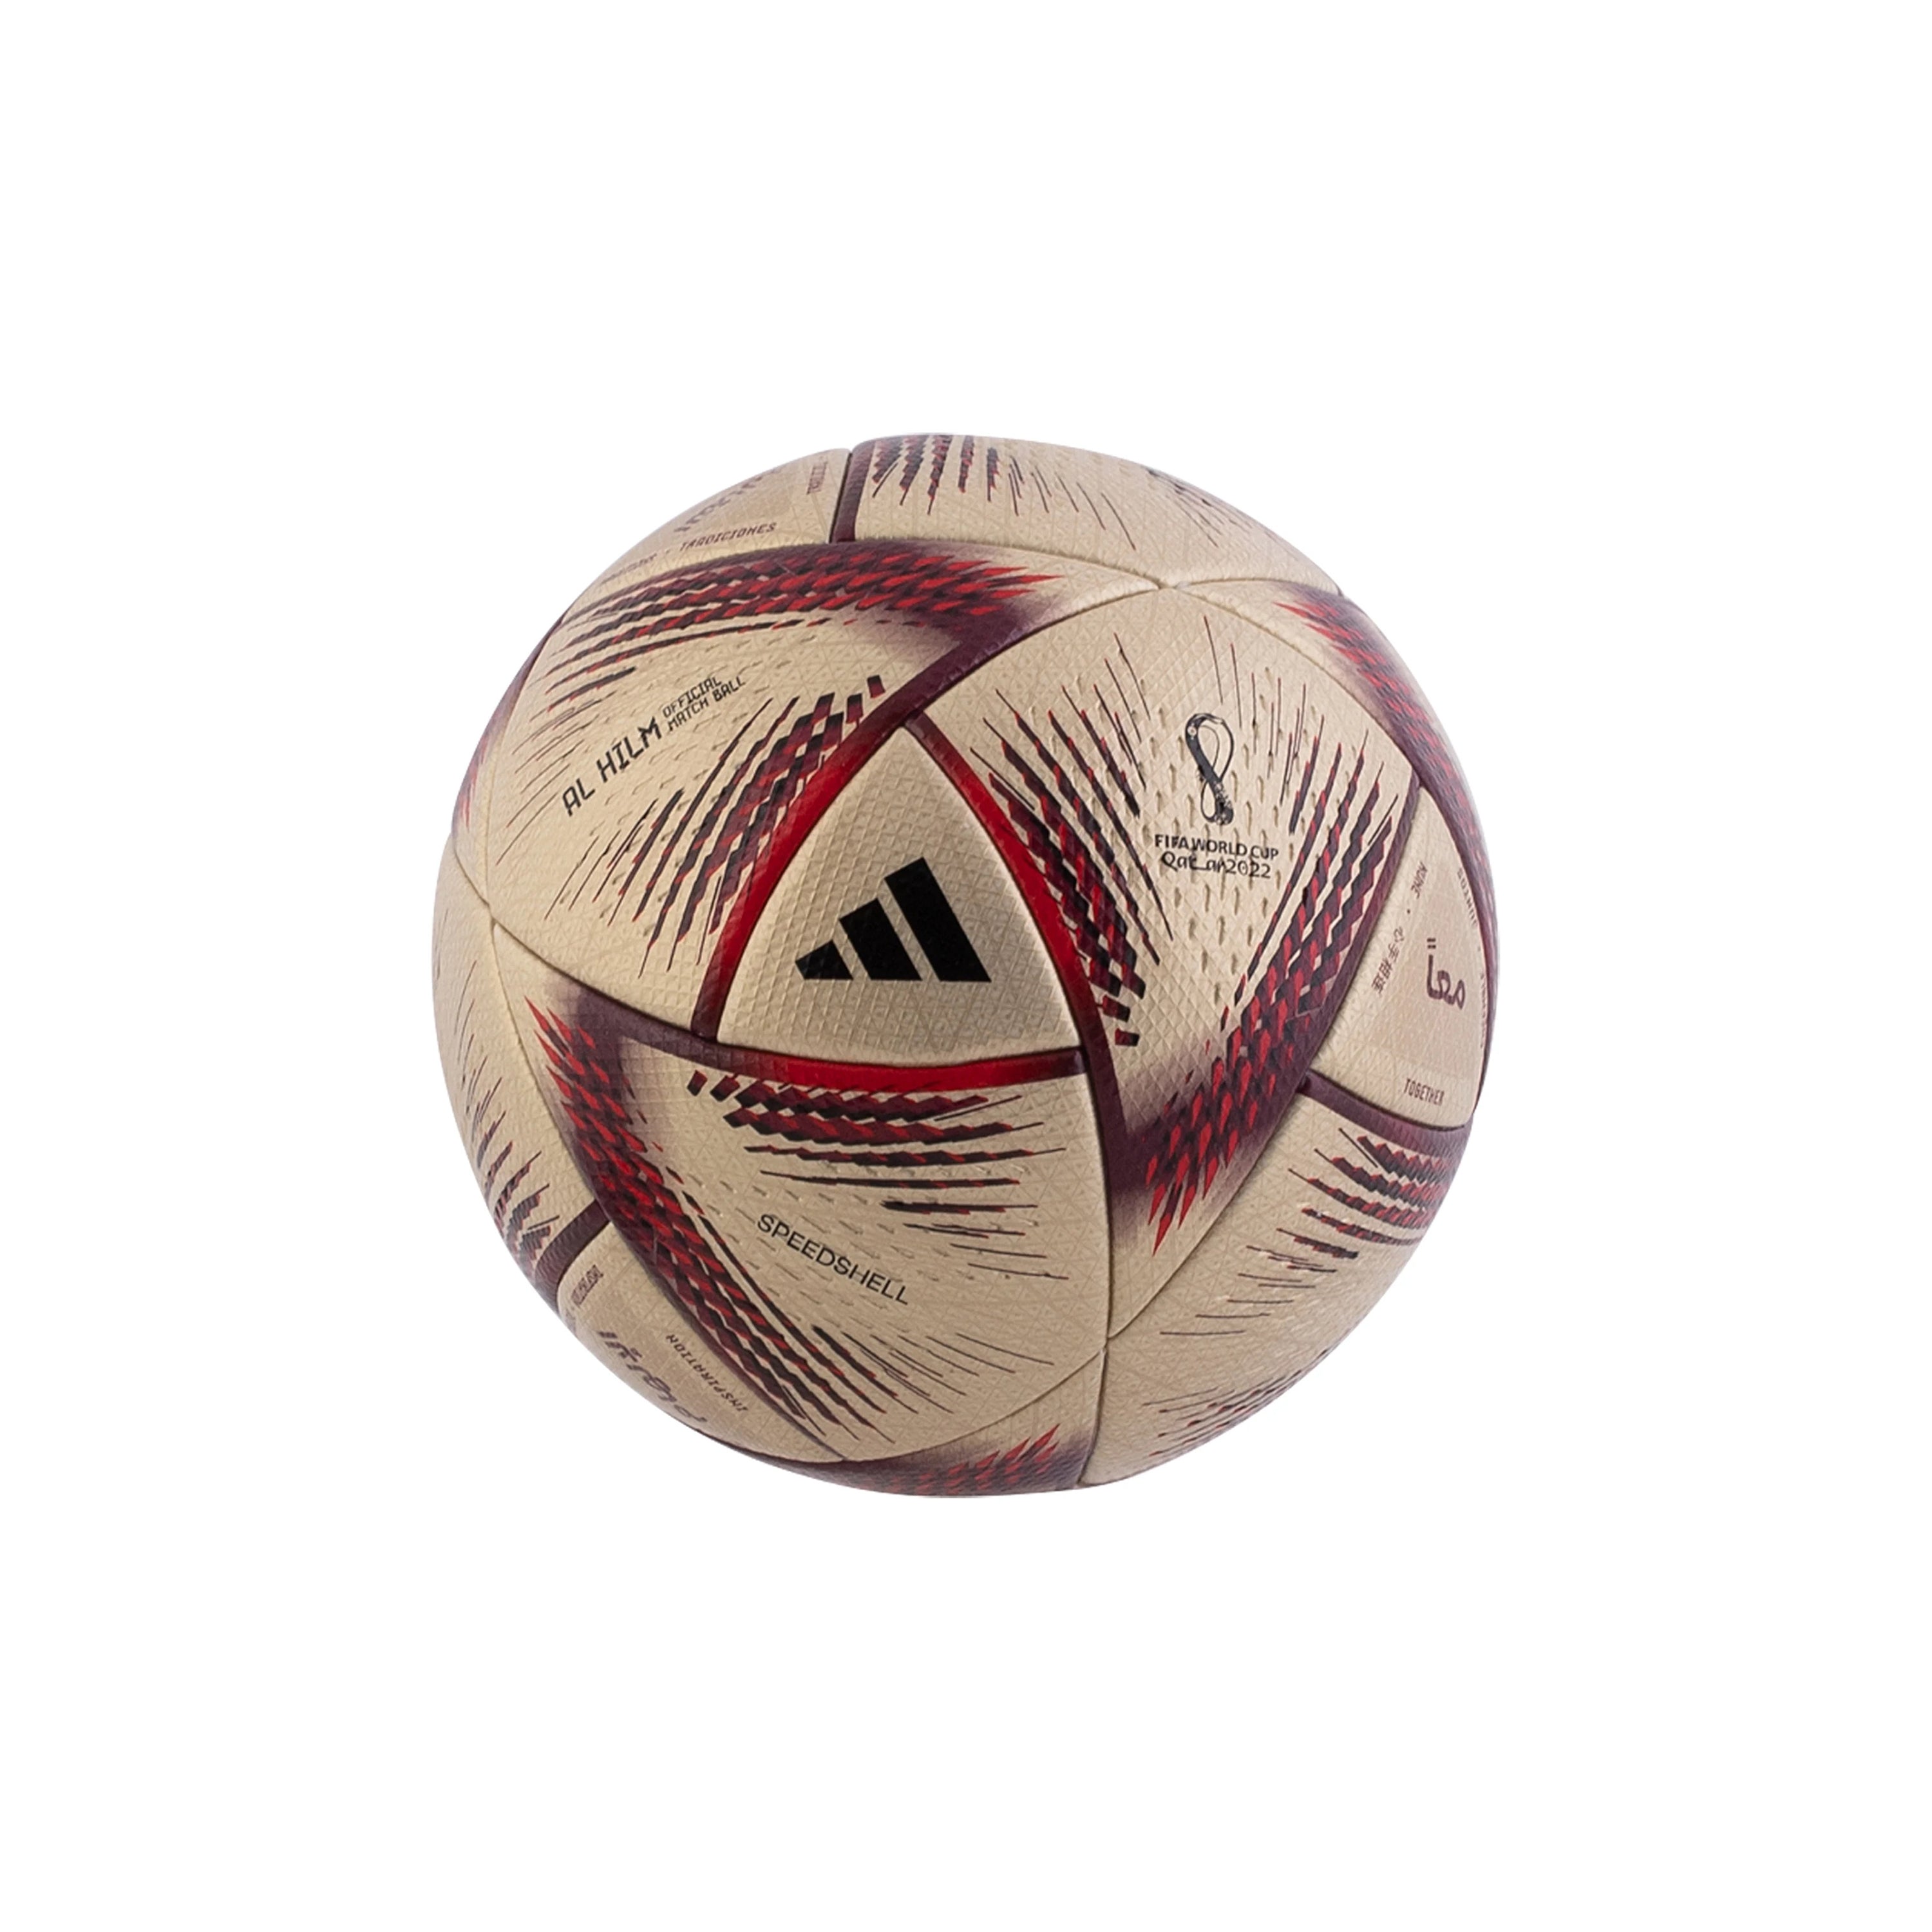 adidas World Cup Official Match Ball [White/Black/SILVMT]